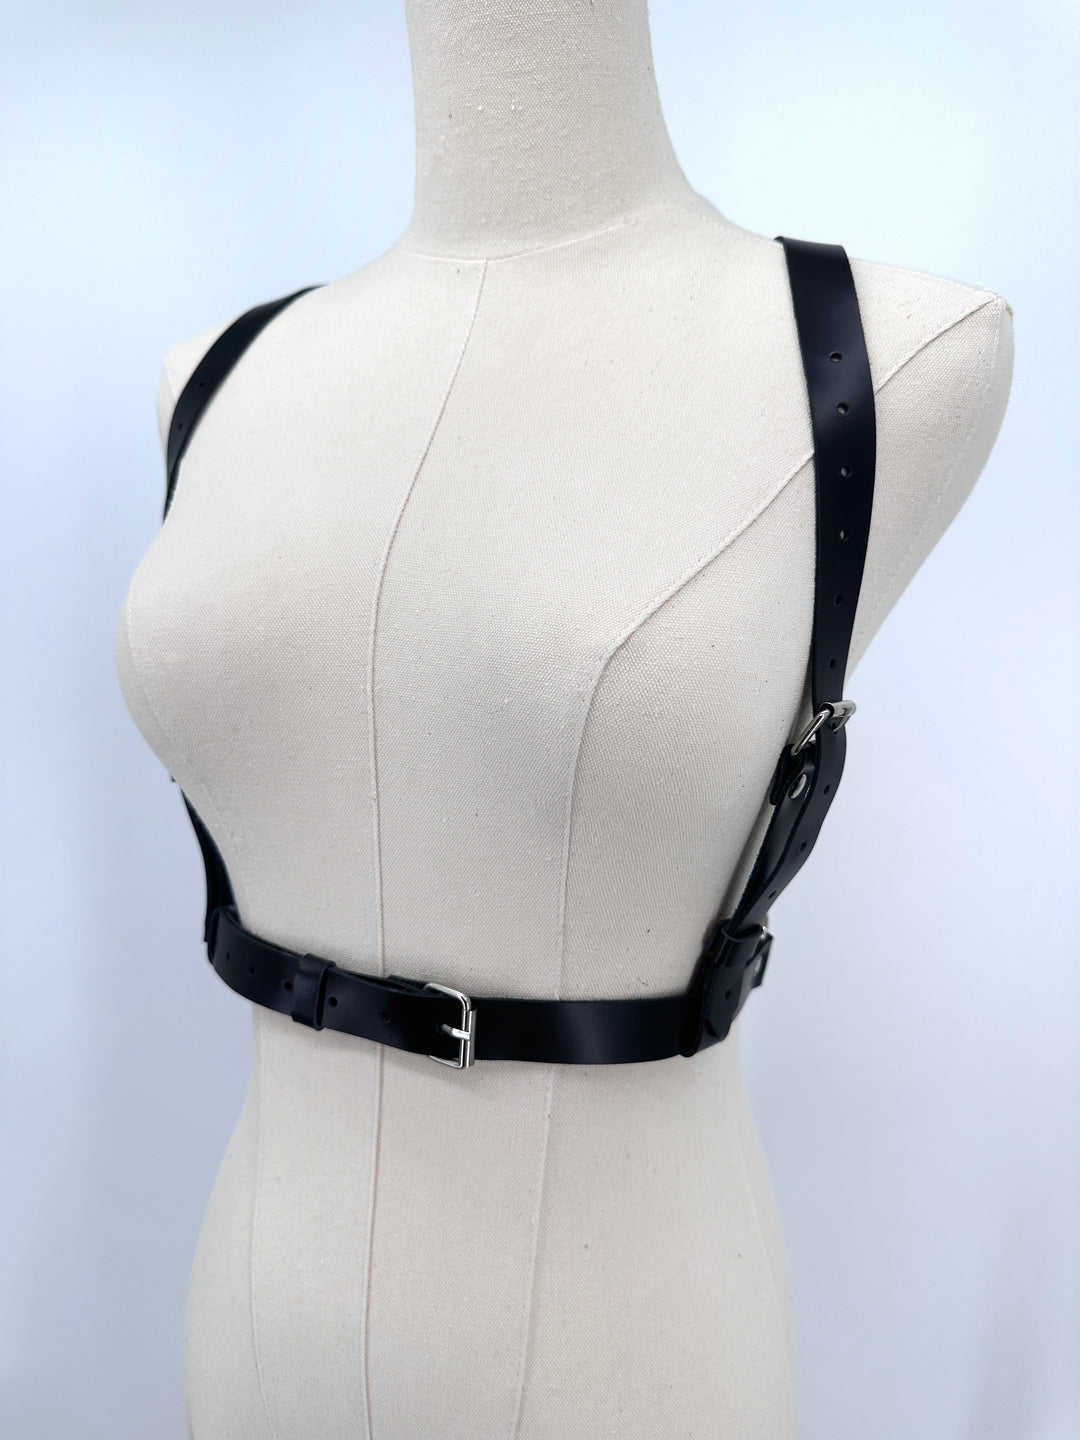 Premium leather harness "Patterns"